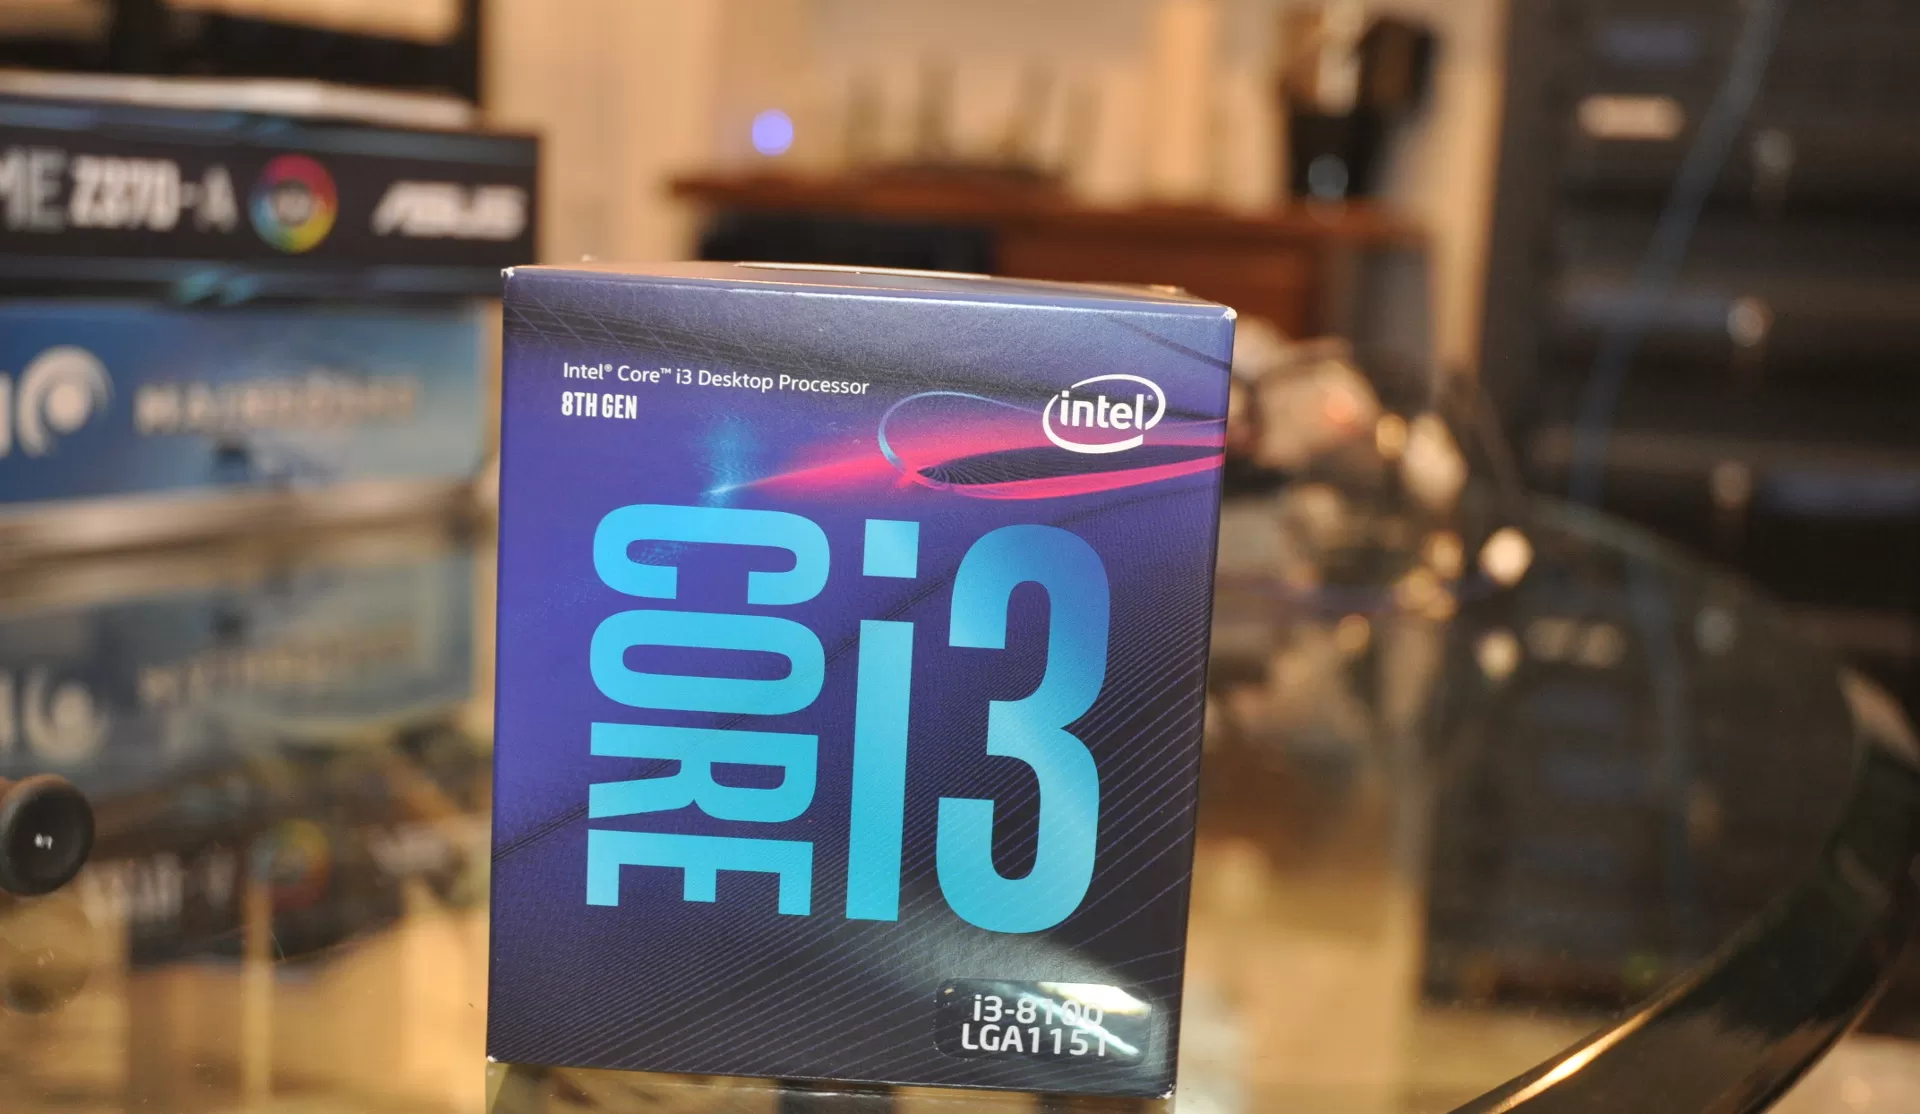 Интел 8100. Intel Core i3-8100. ПК Intel Core i3 8100. Core i7 UHD. Intel(r) Core(TM) i3-8100 CPU @ 3.60GHZ 3.60 GHZ.